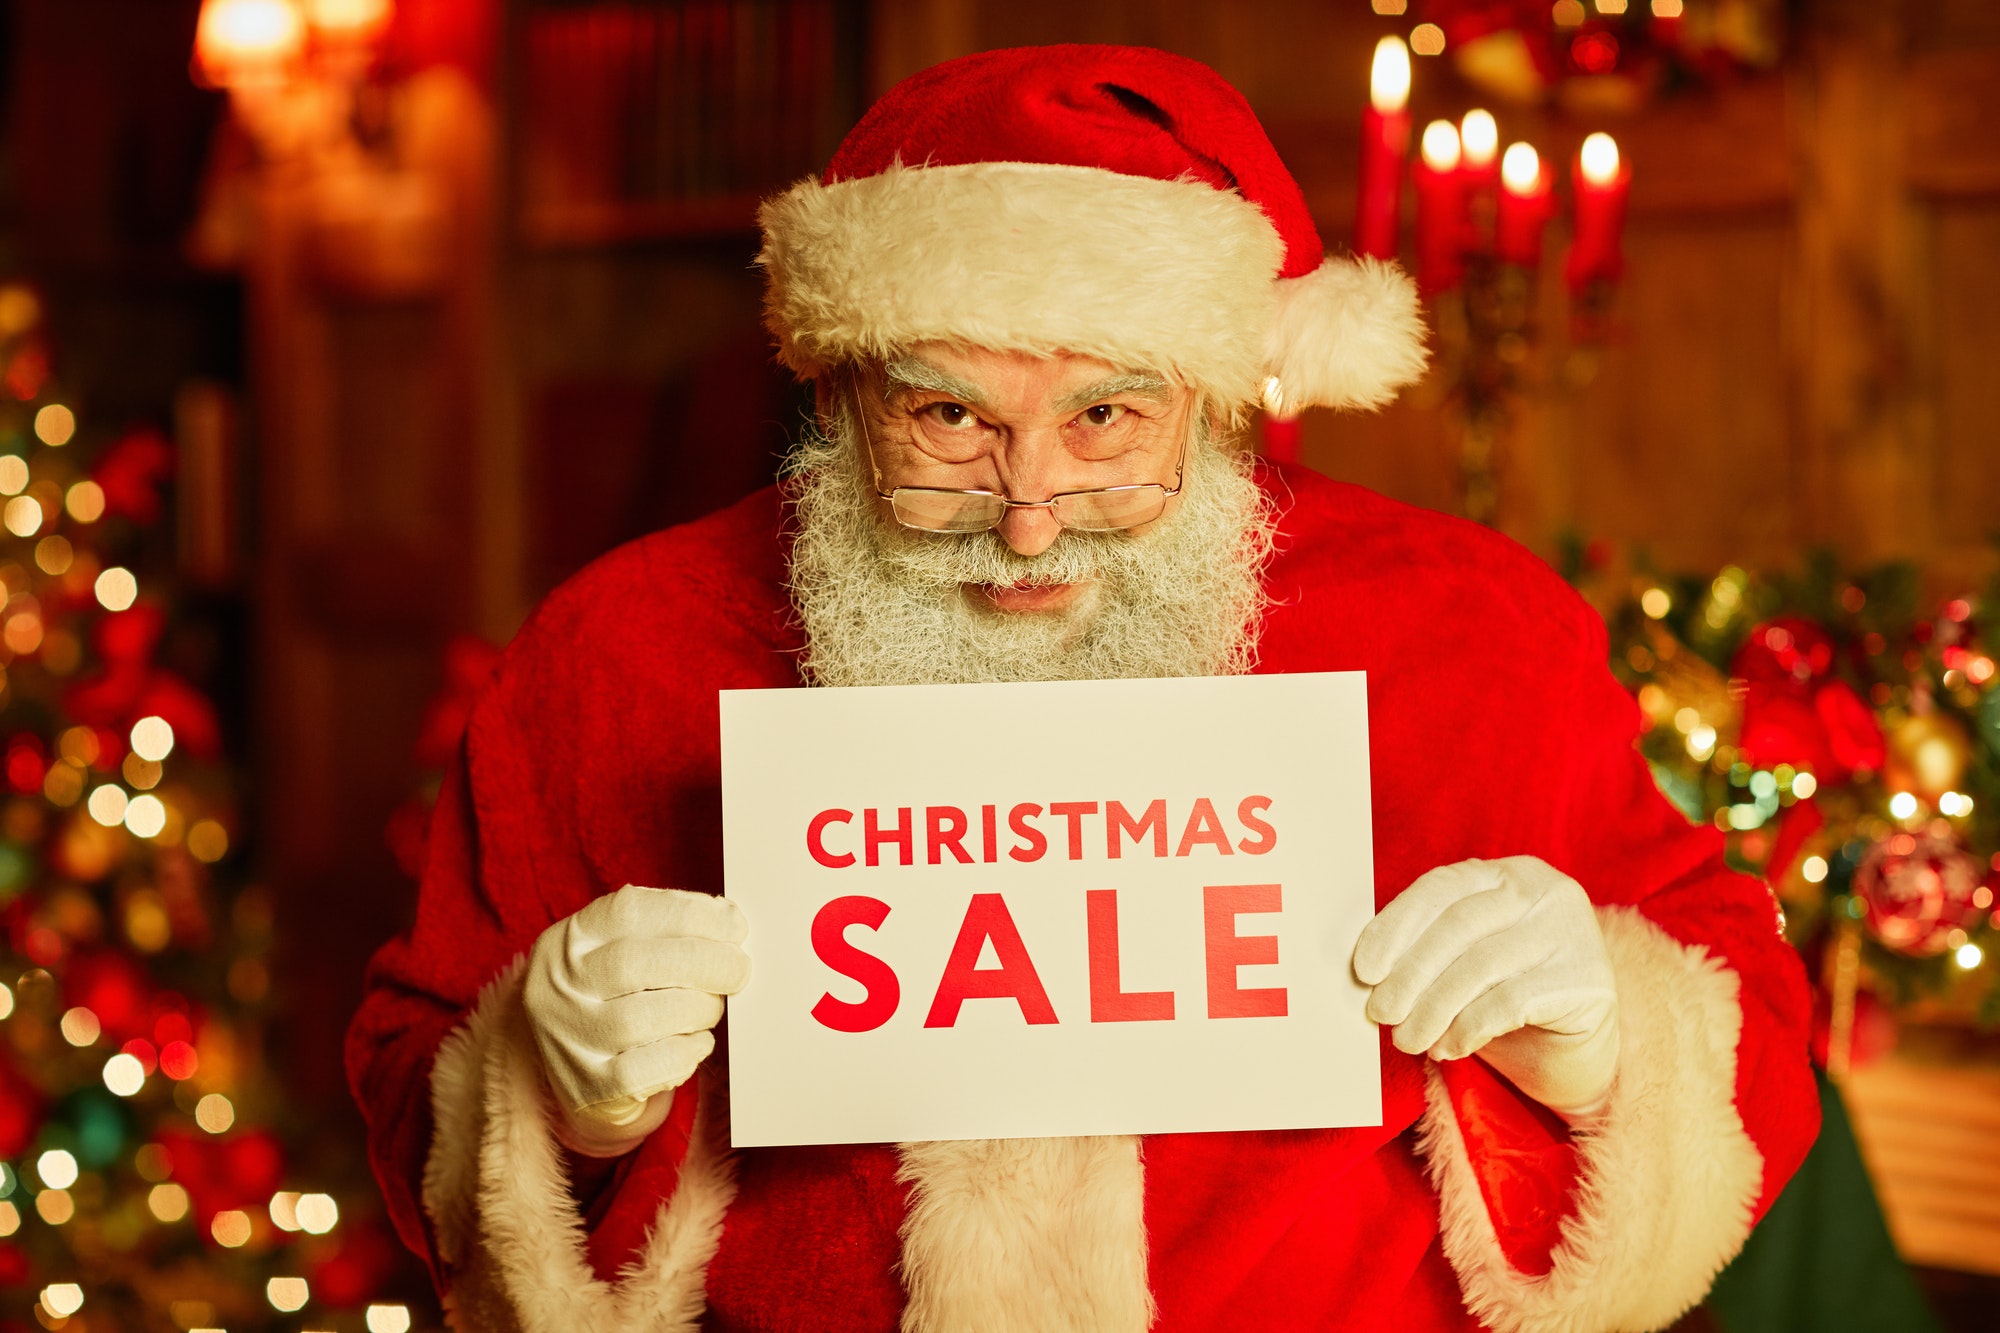 Santa Claus Holding Christmas Sale Sign